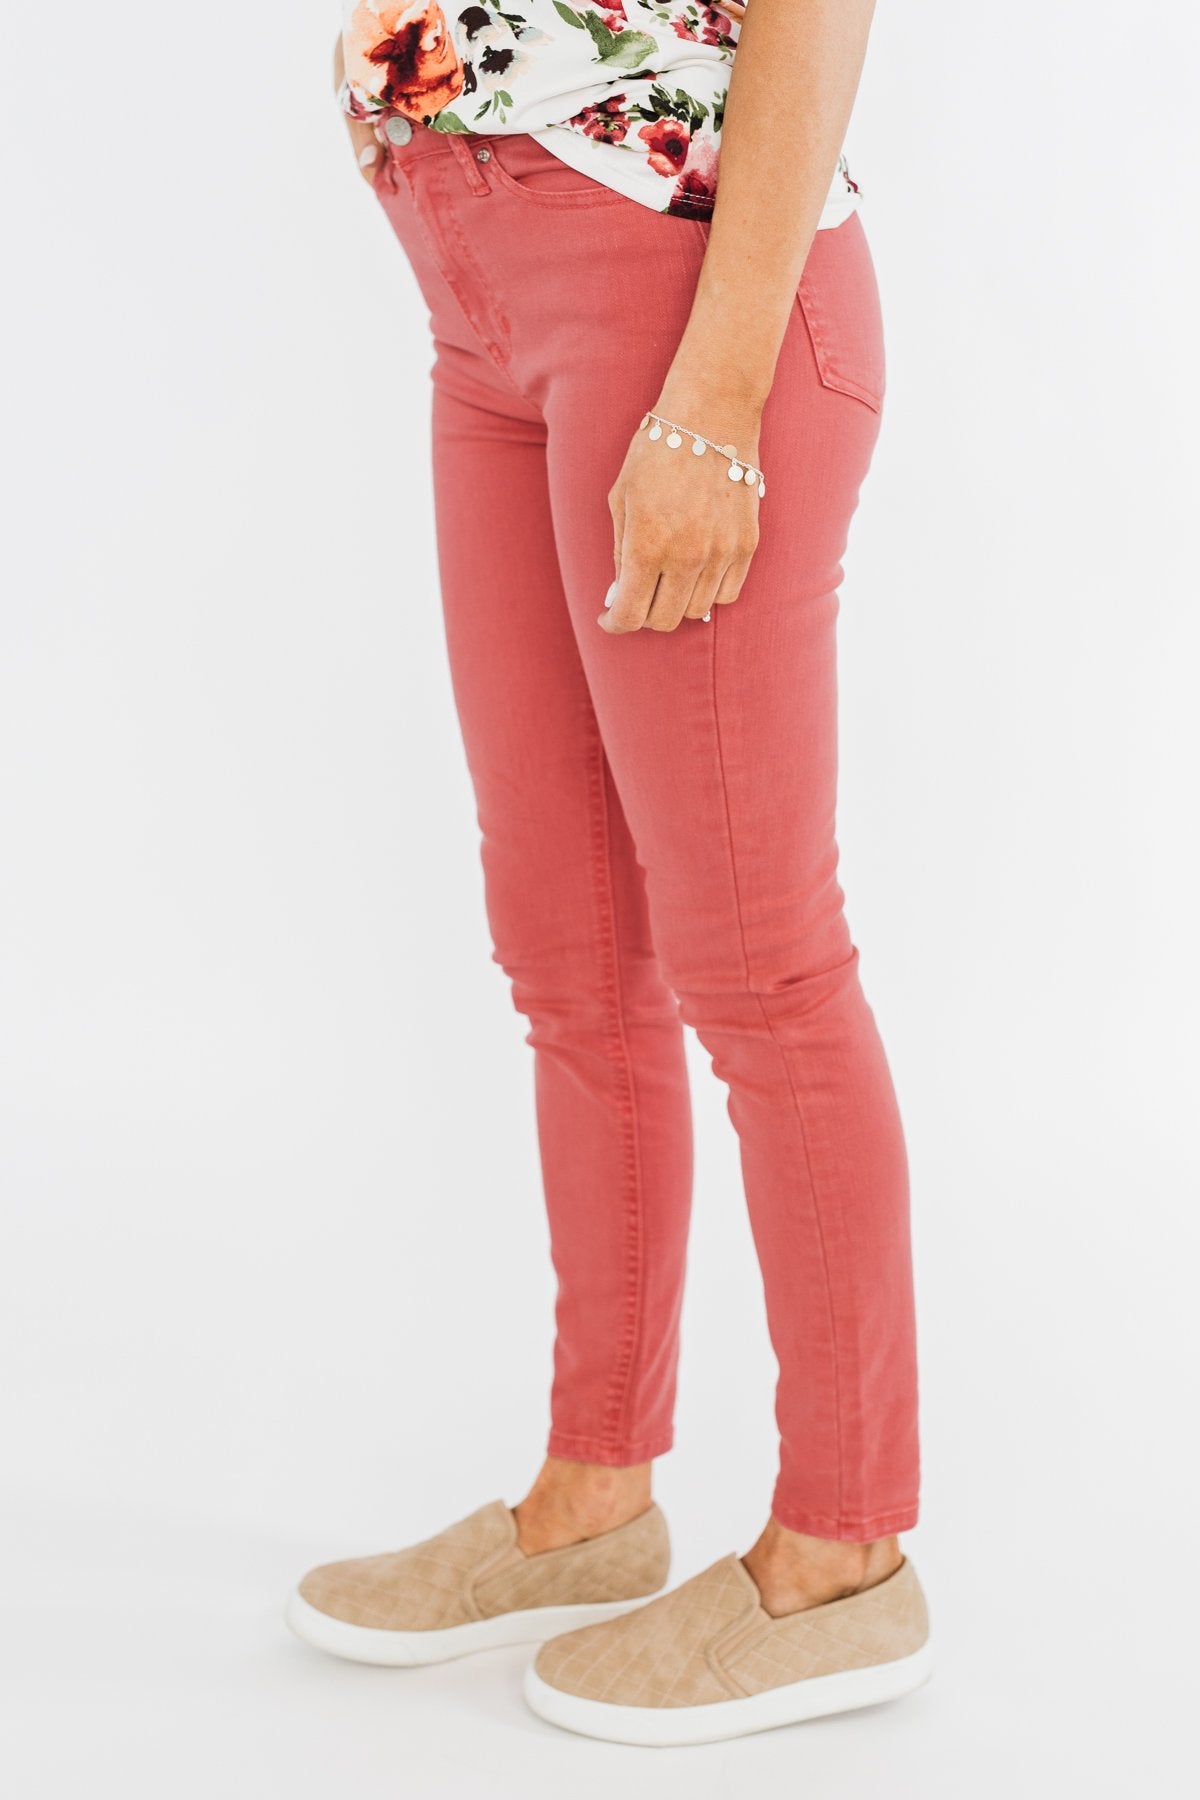 Celebrity Pink Skinny Jeans- Coral